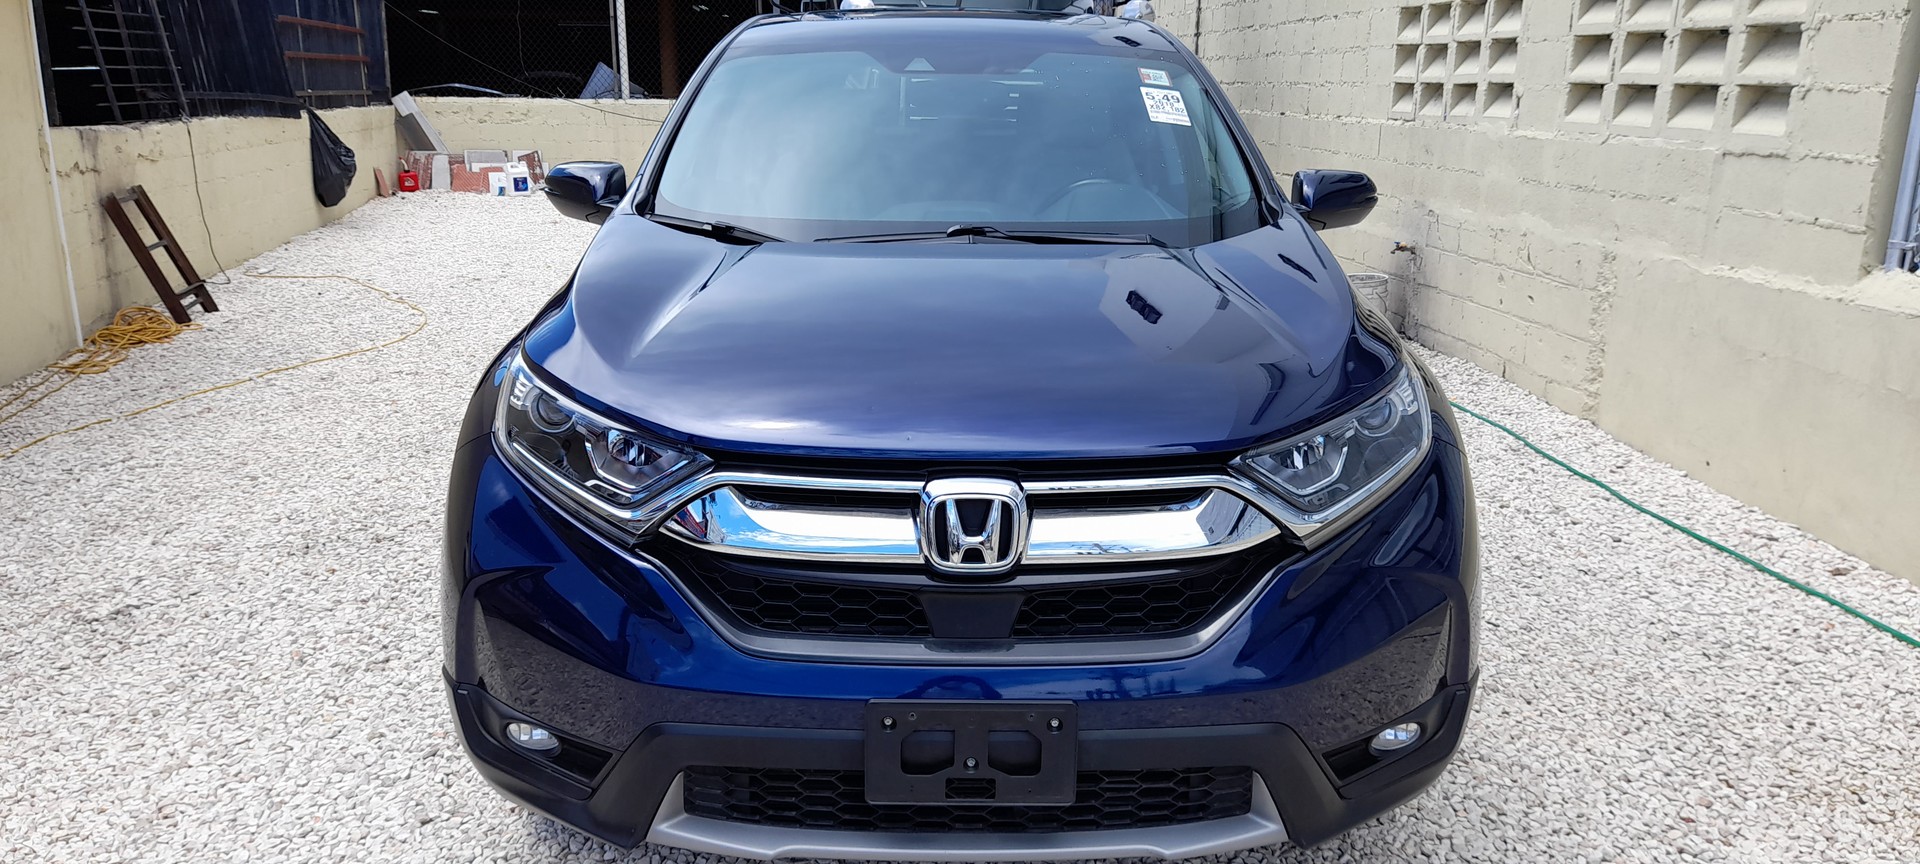 jeepetas y camionetas - Honda CRV full 2018 US$34,200